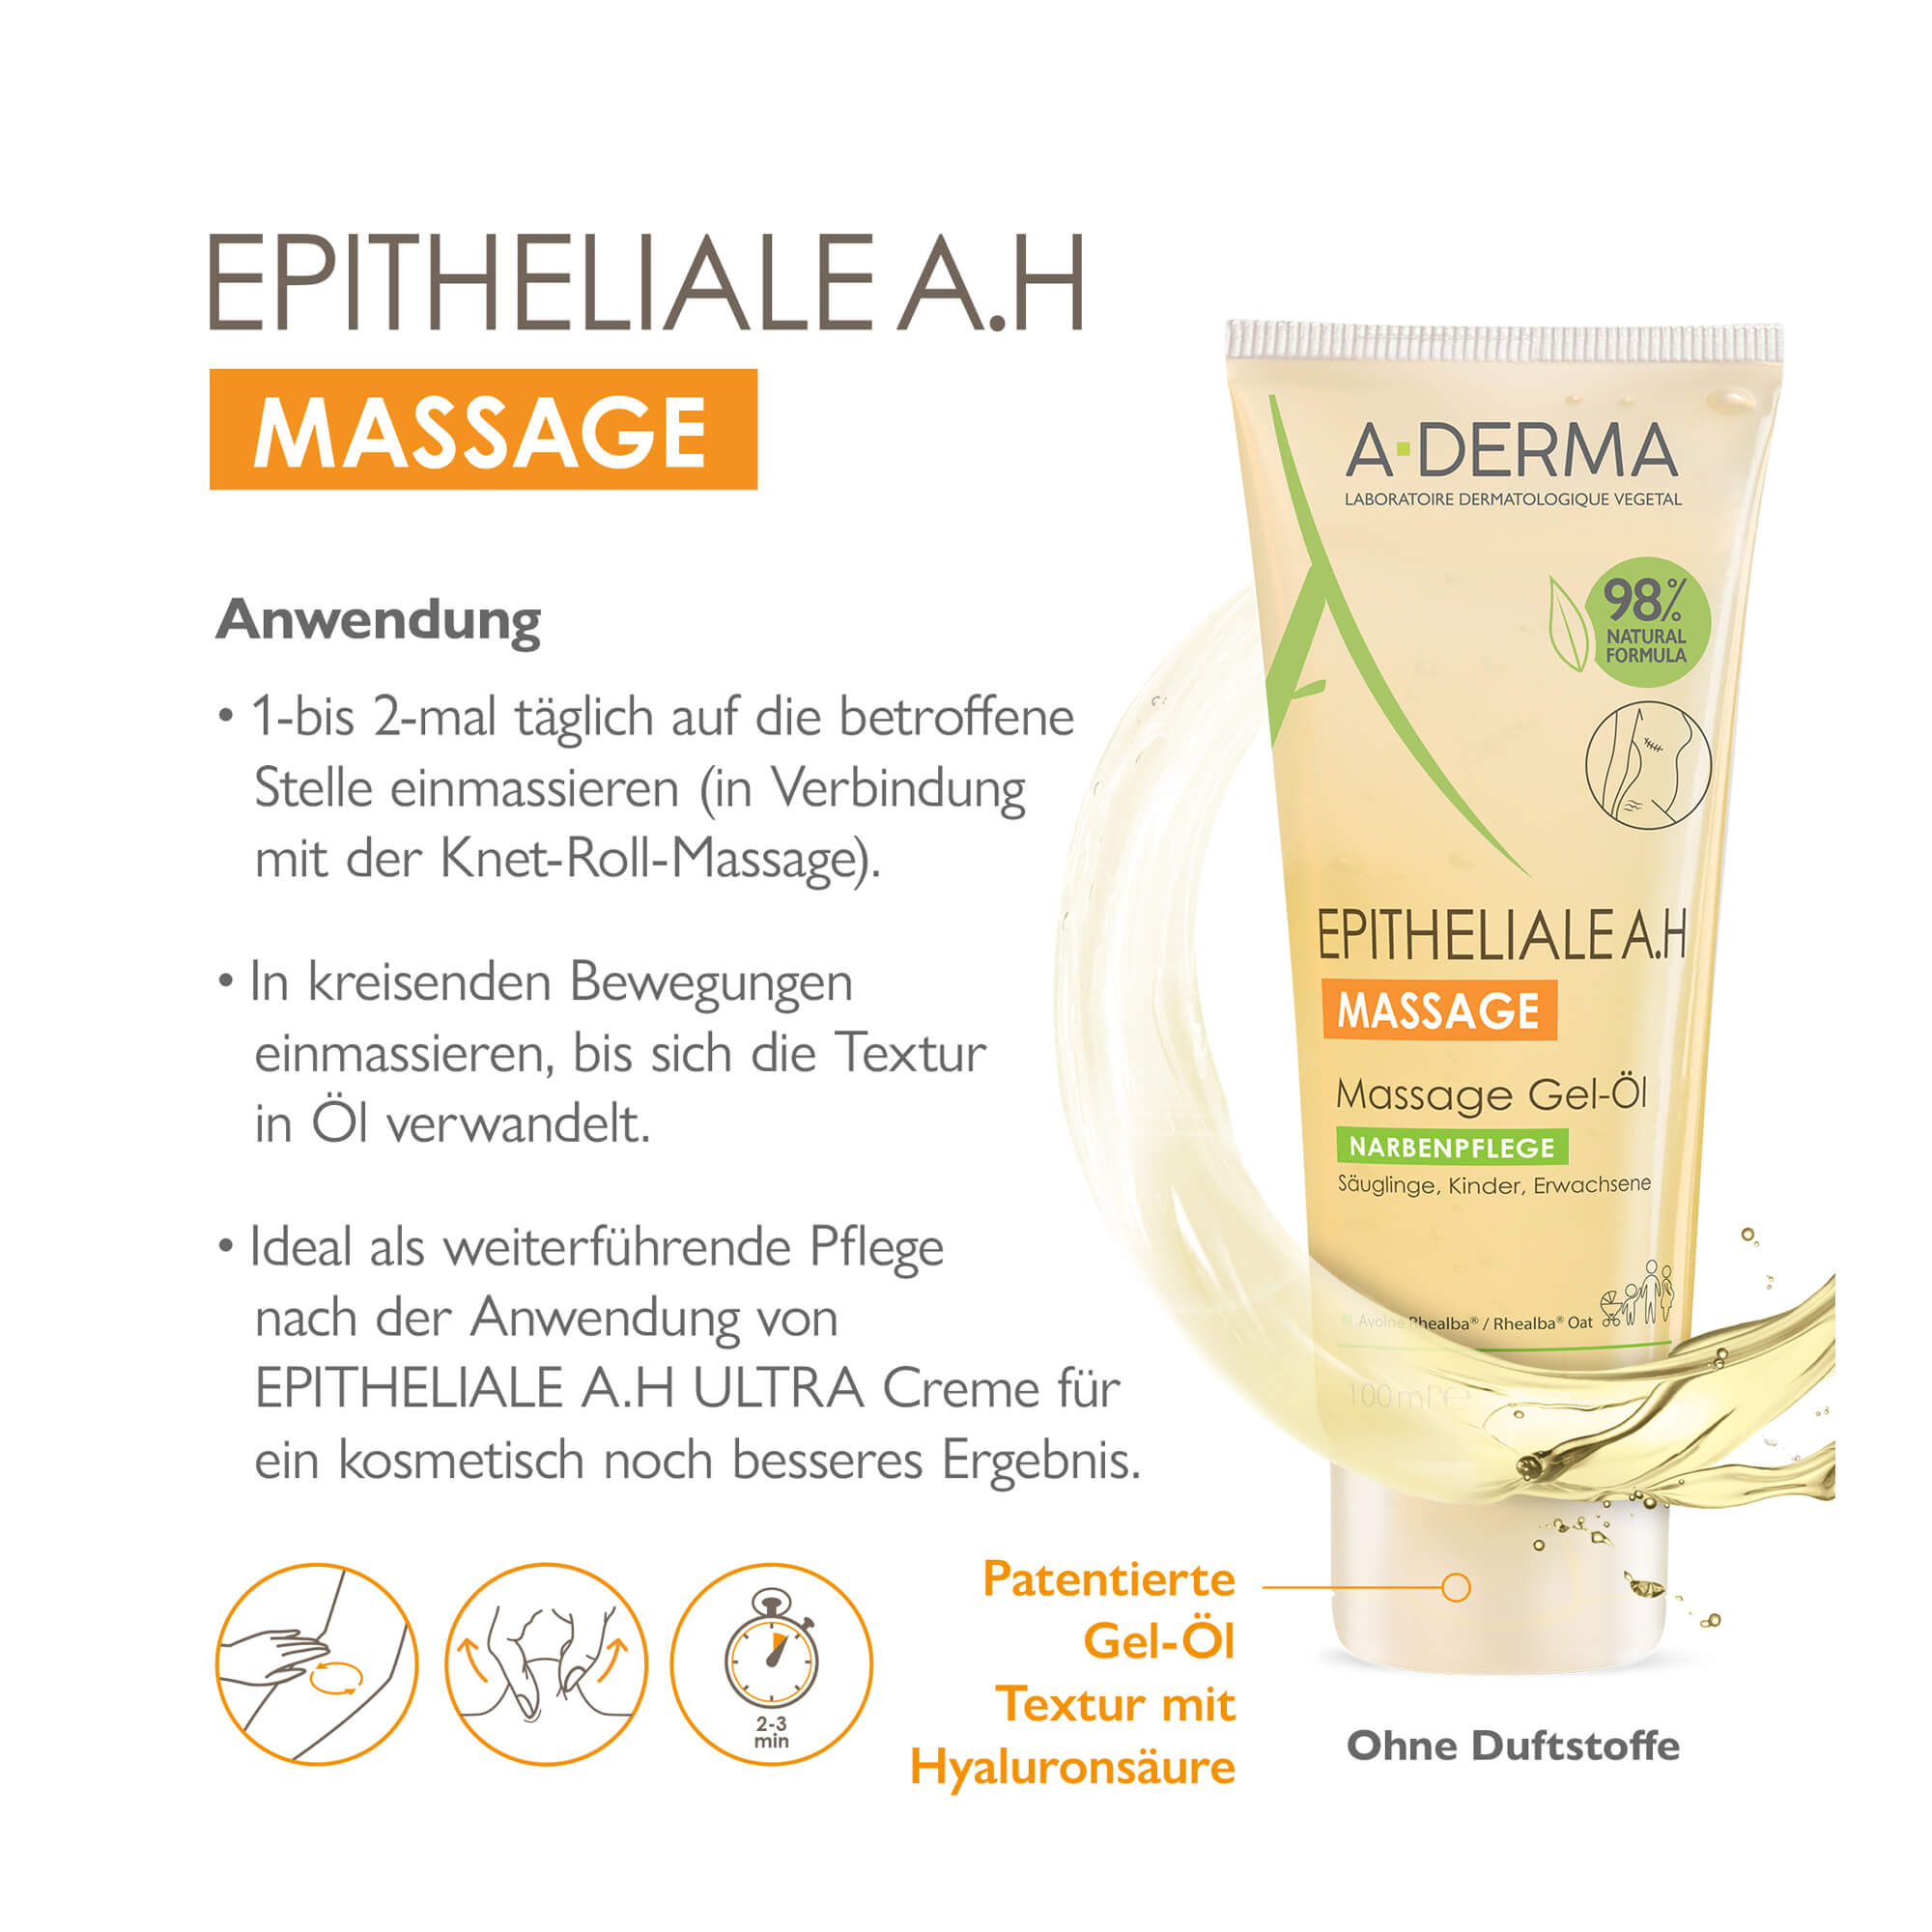 A-Derma EPITHELIALE A.H Massage Gel-Öl